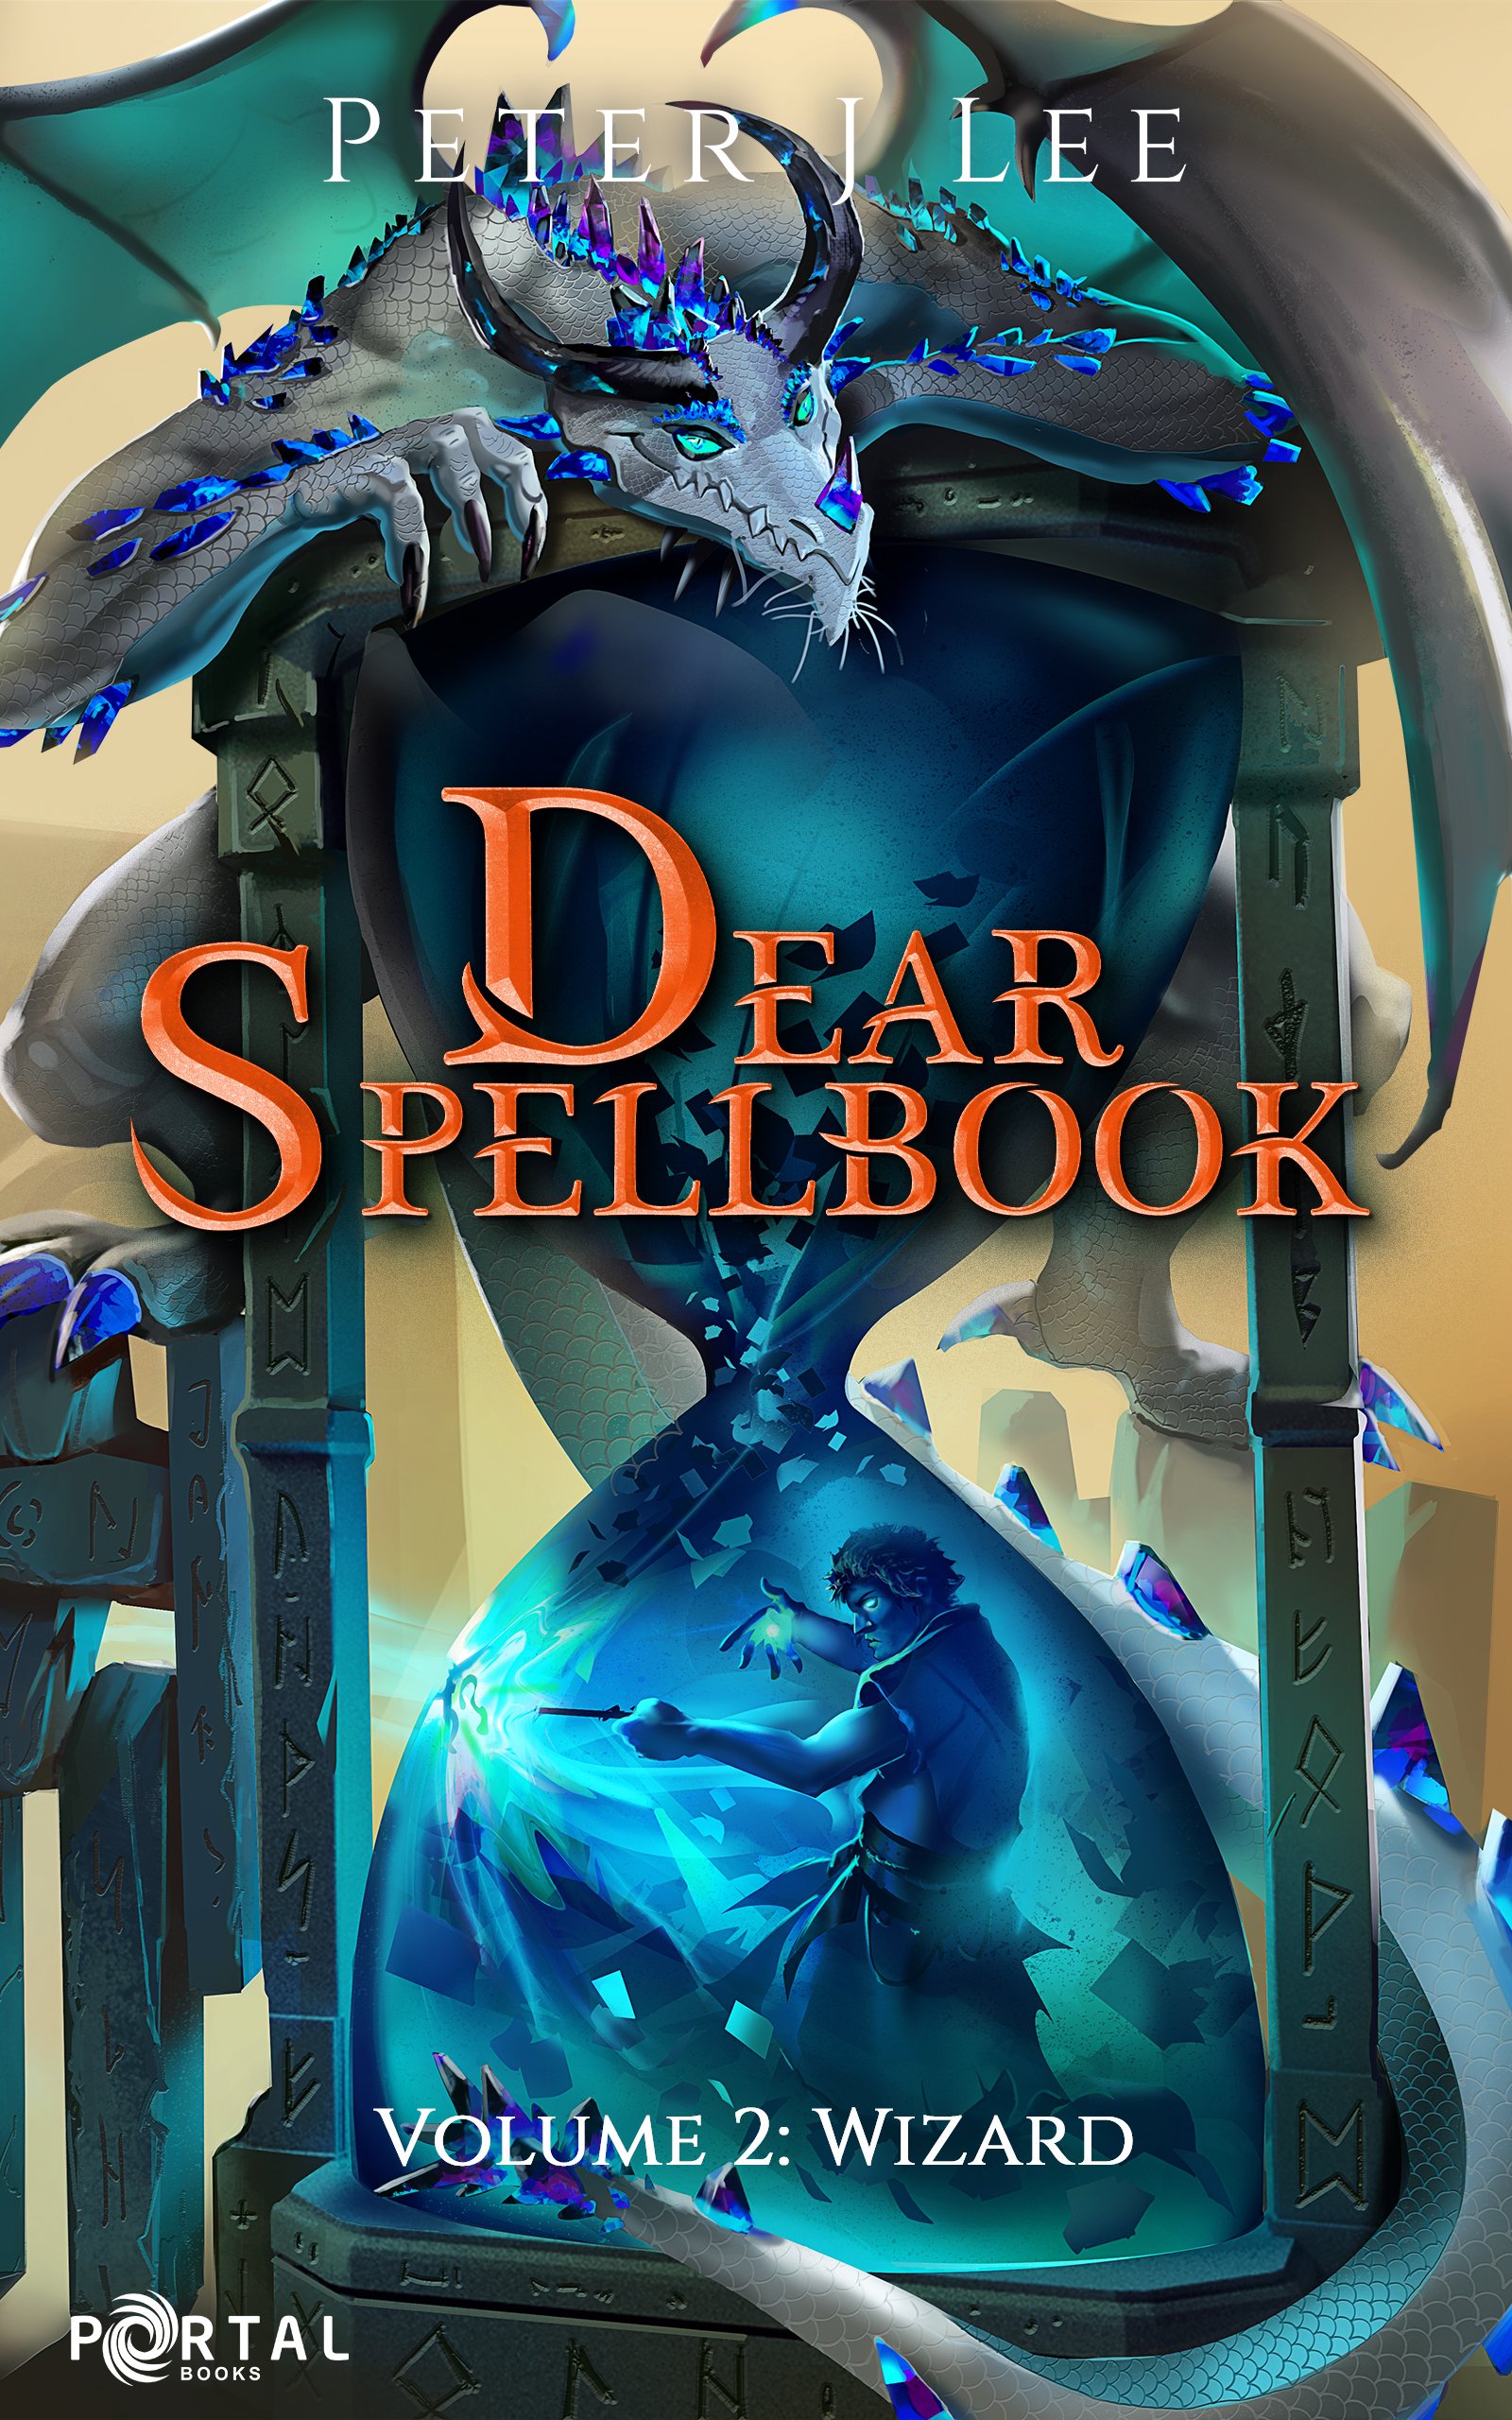 ebook - Dear Spellbook - book 2 (1).jpg